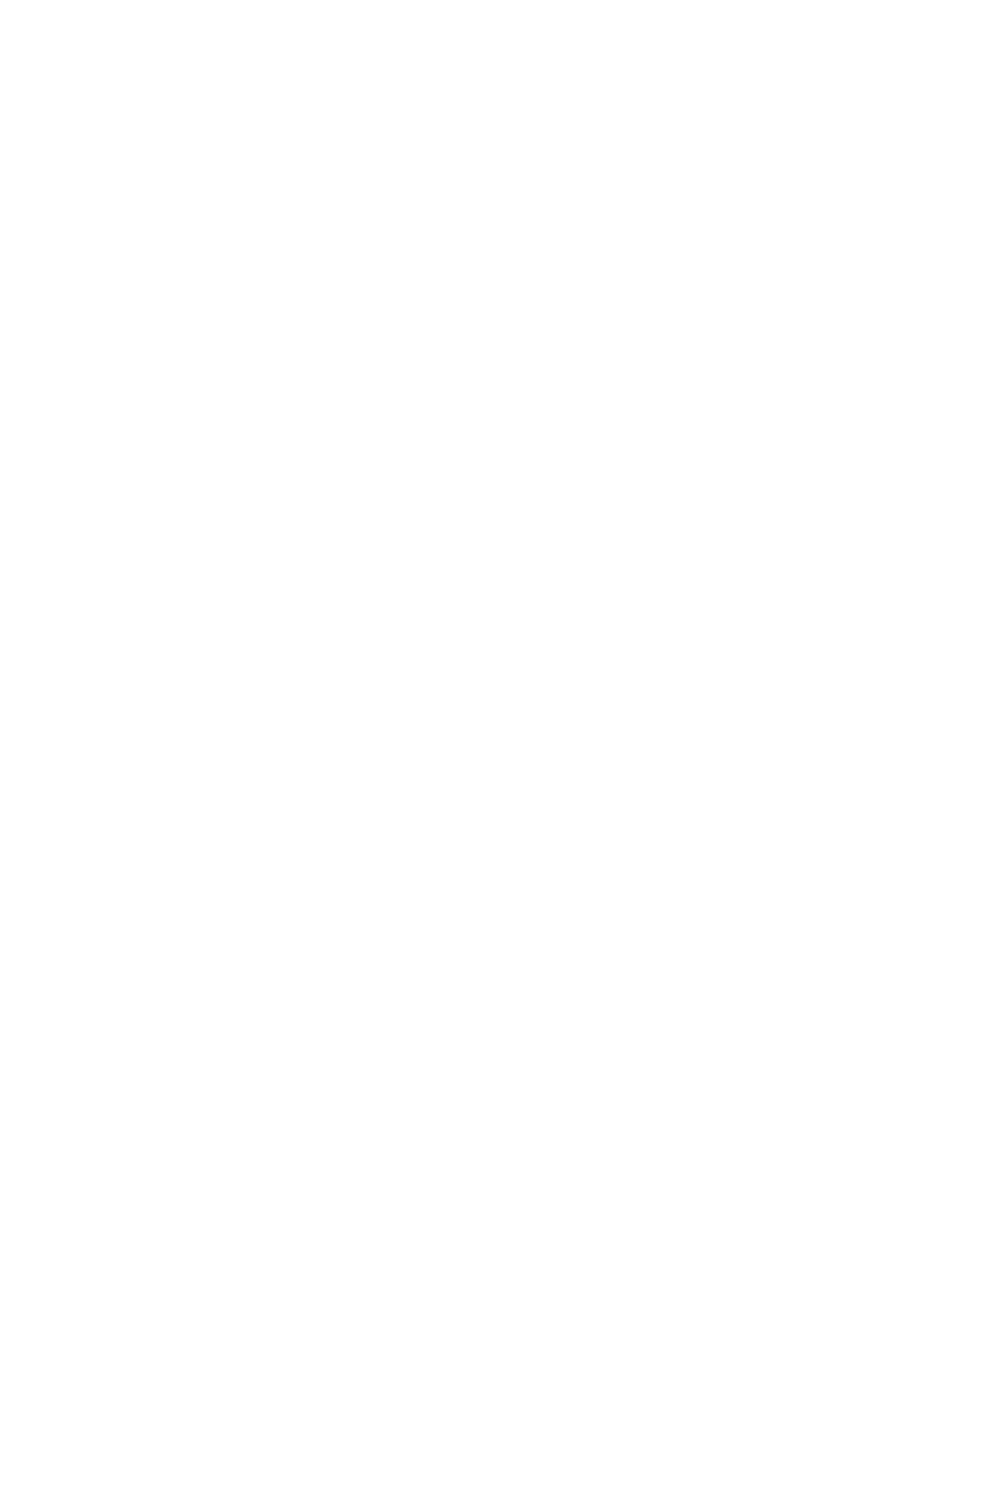 Danielle Levitt mens fashion photography celebrity portrait of MOONLIGHT actor Ashton Sanders wearing white lace designer suit against silk backdrop for Boys By Girls Magazine editorial 